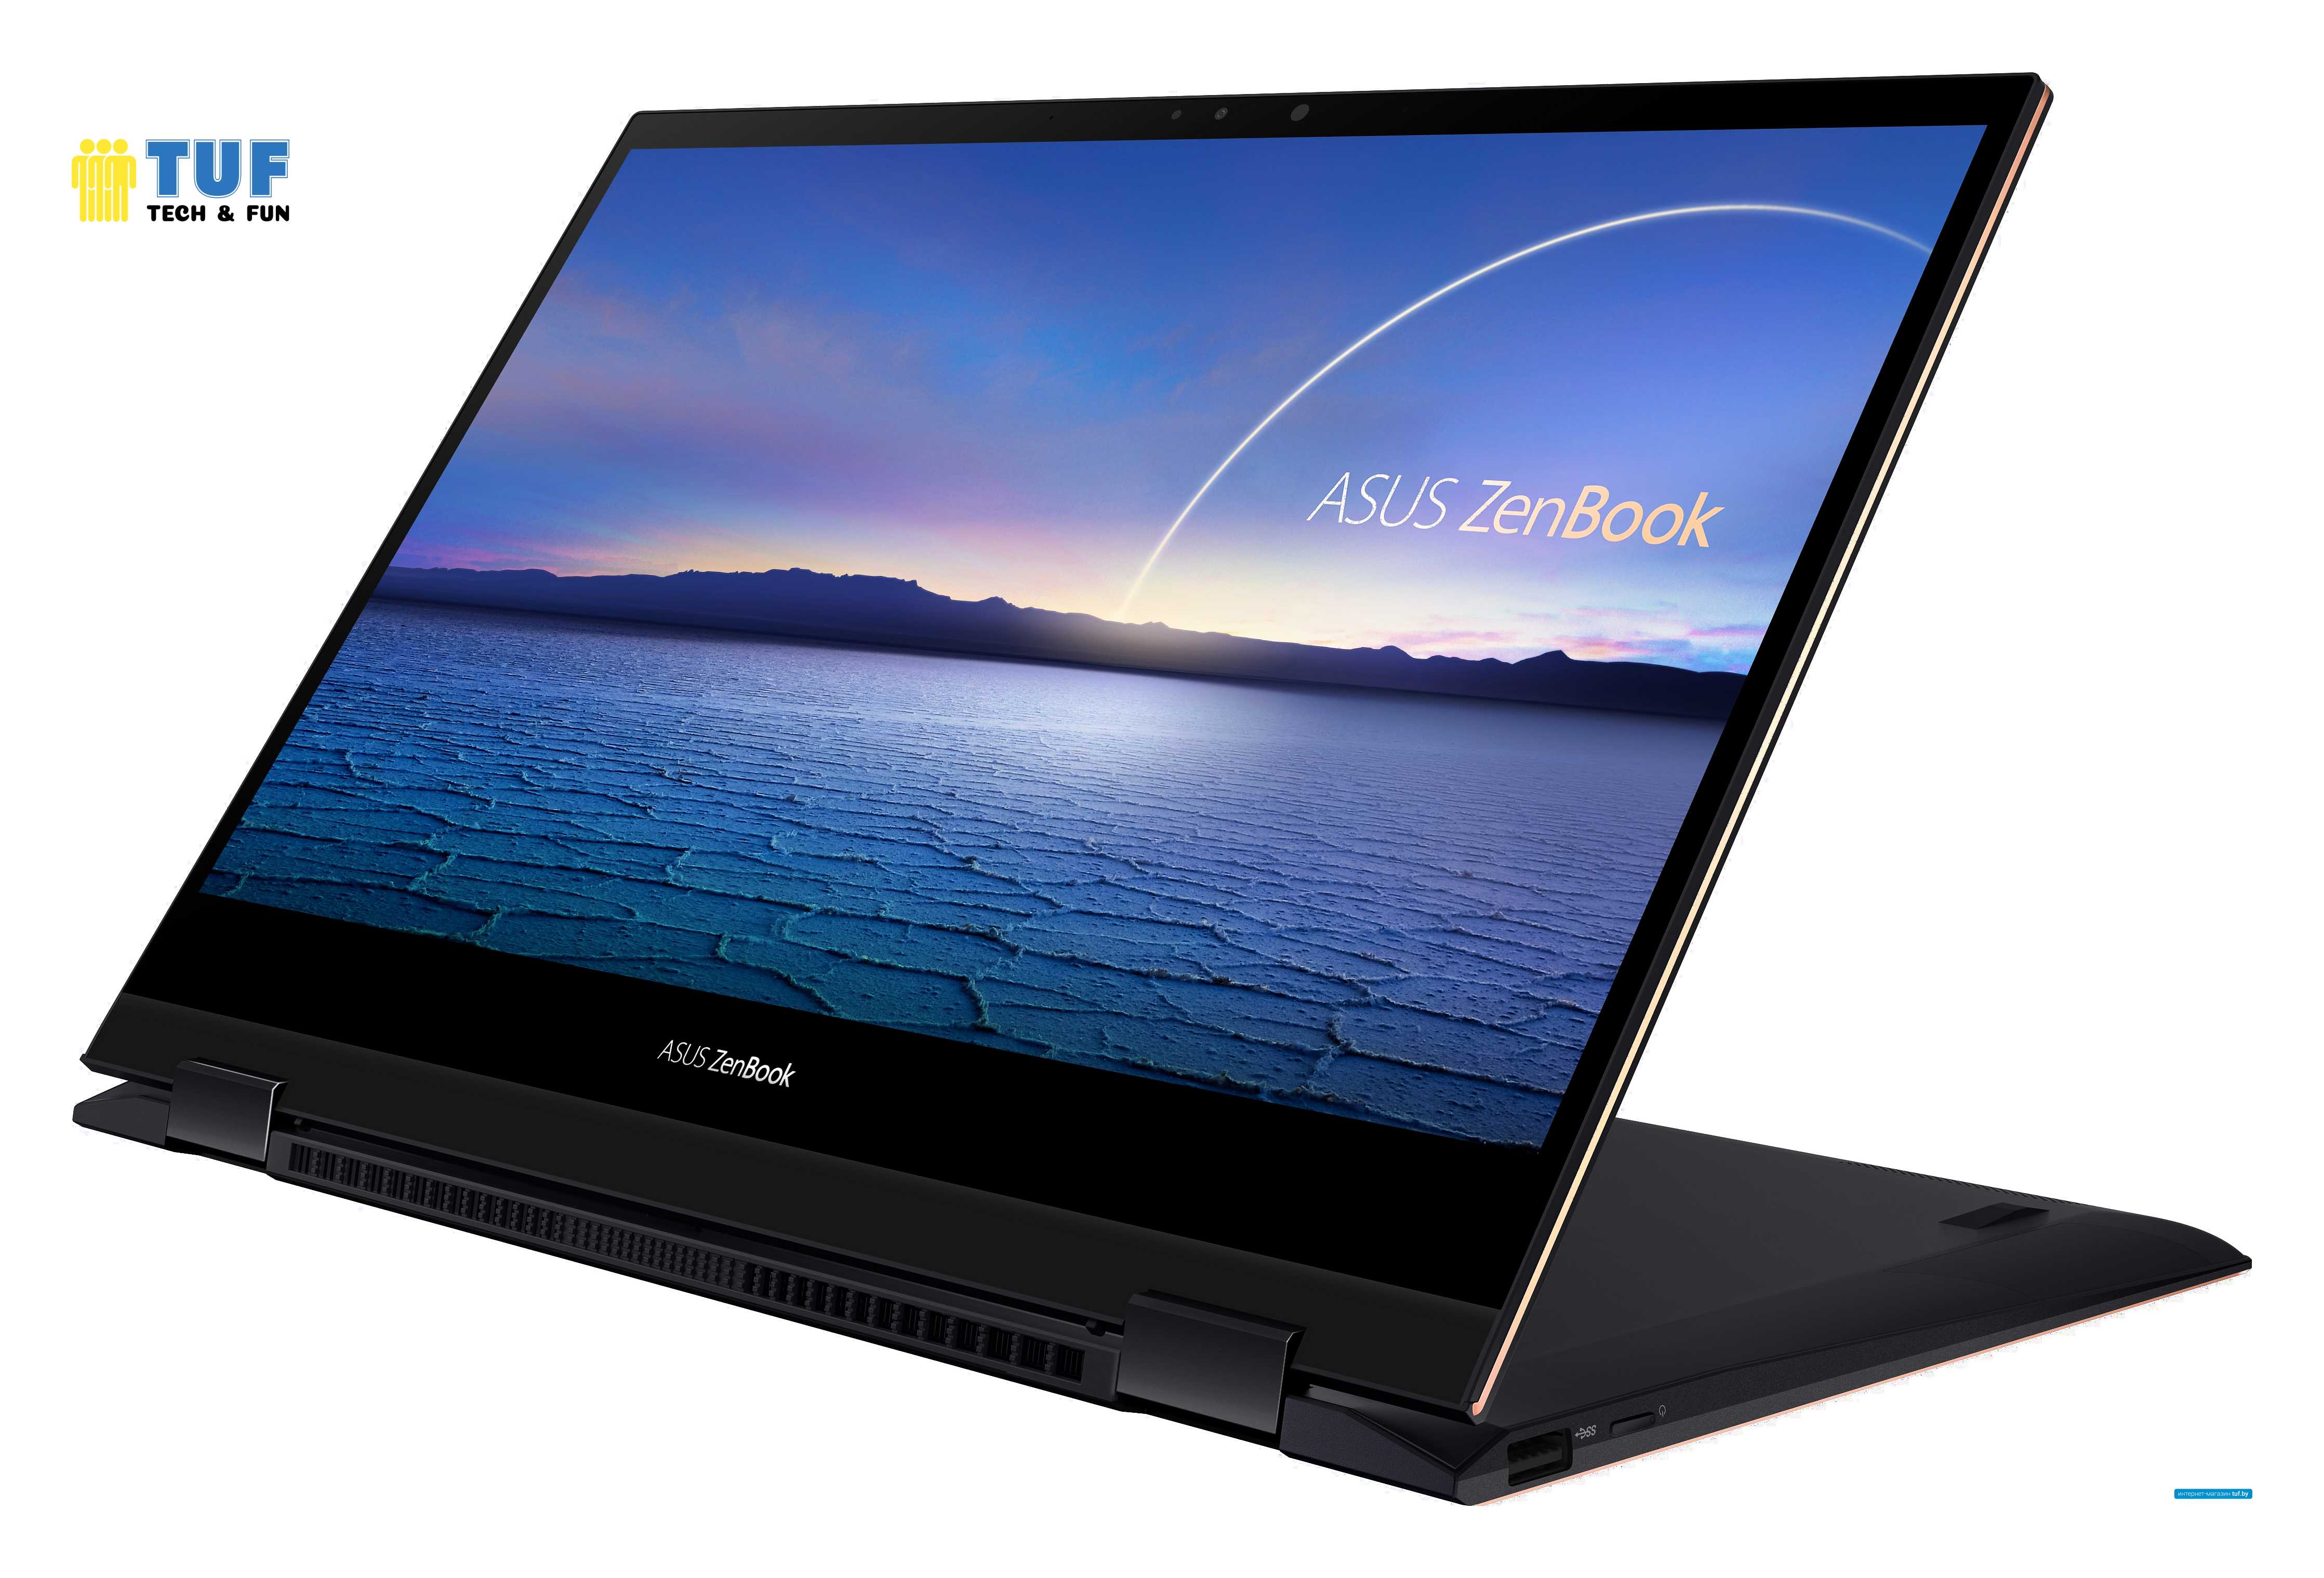 Ноутбук 2-в-1 ASUS ZenBook Flip S UX371EA-HL003R